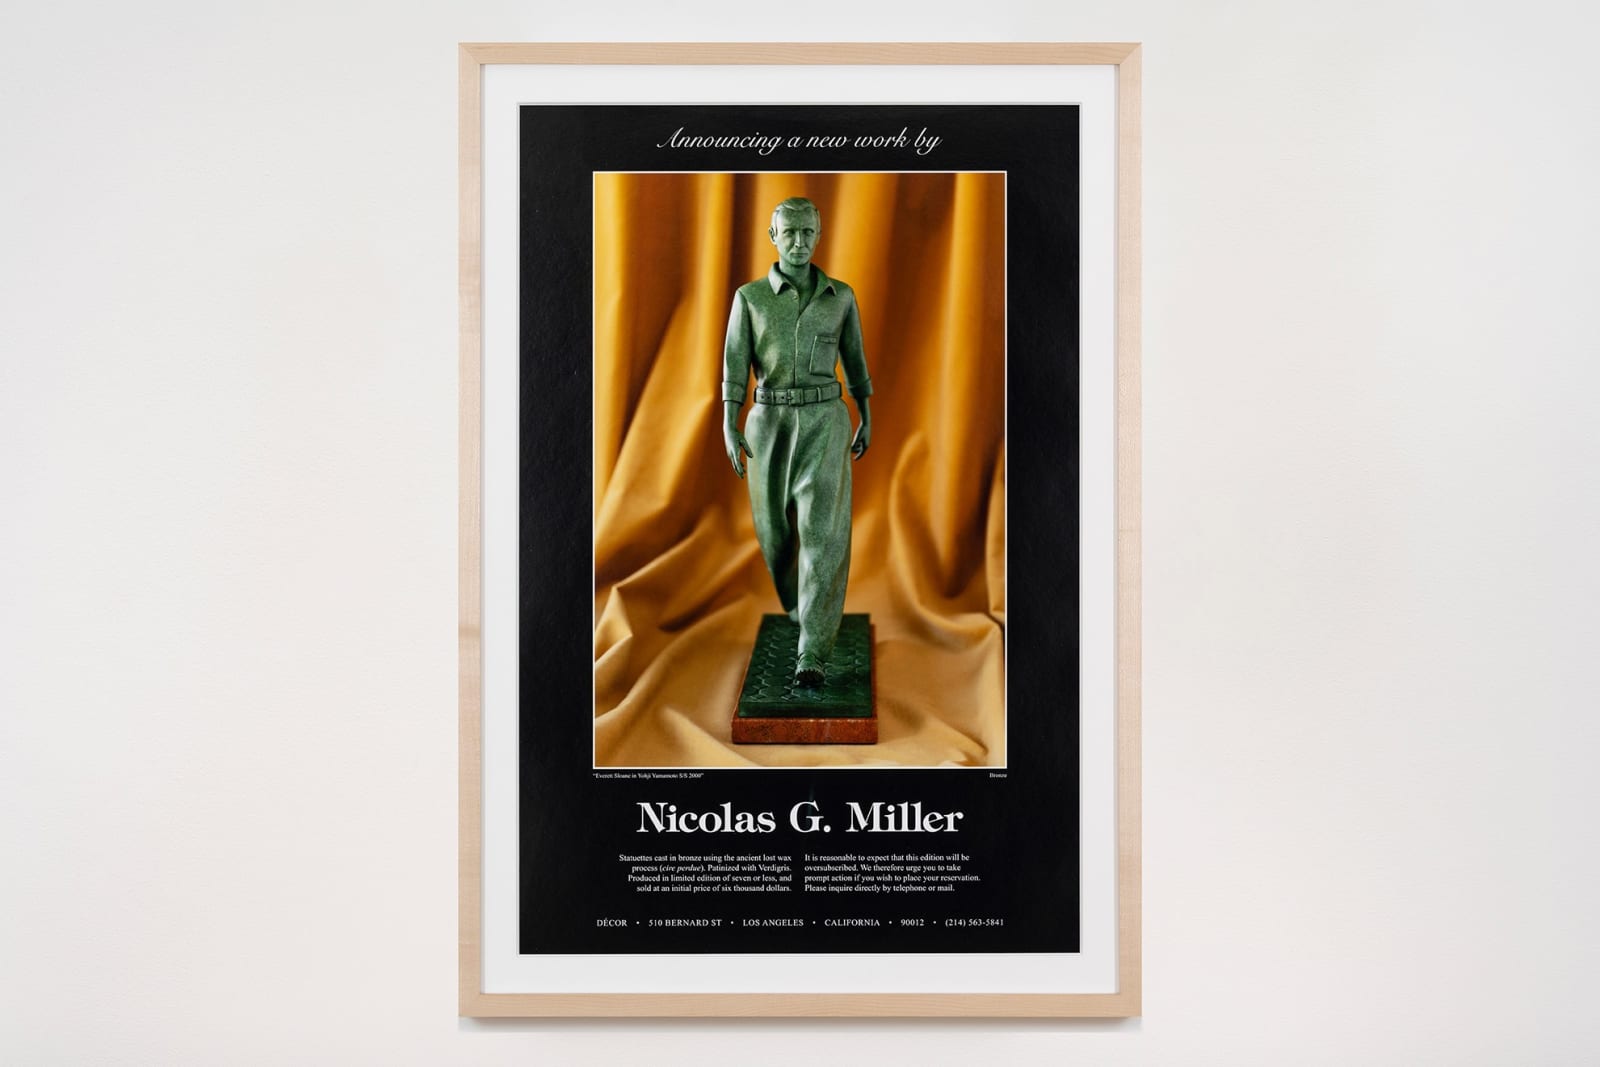 Nicolas G. Miller, Announcing a New Work, 2021